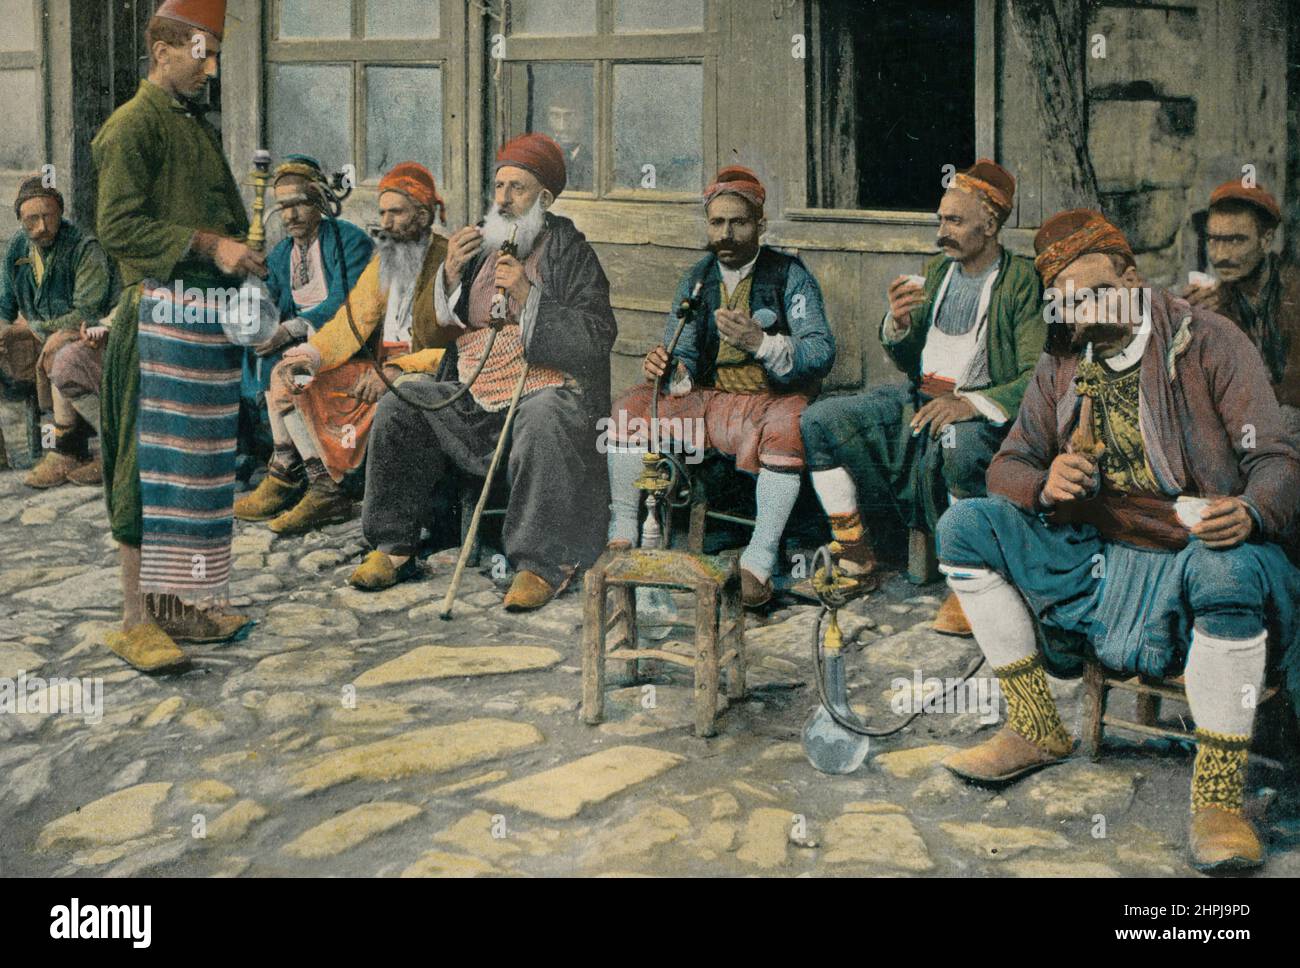 FUMEURS TURCS A LA PORTE D'UN CAFÉ. Autour Du Monde Turquie II 1895 - 1900 (3) - 19. Jahrhundert französischer Farbfotografiedruck Stockfoto